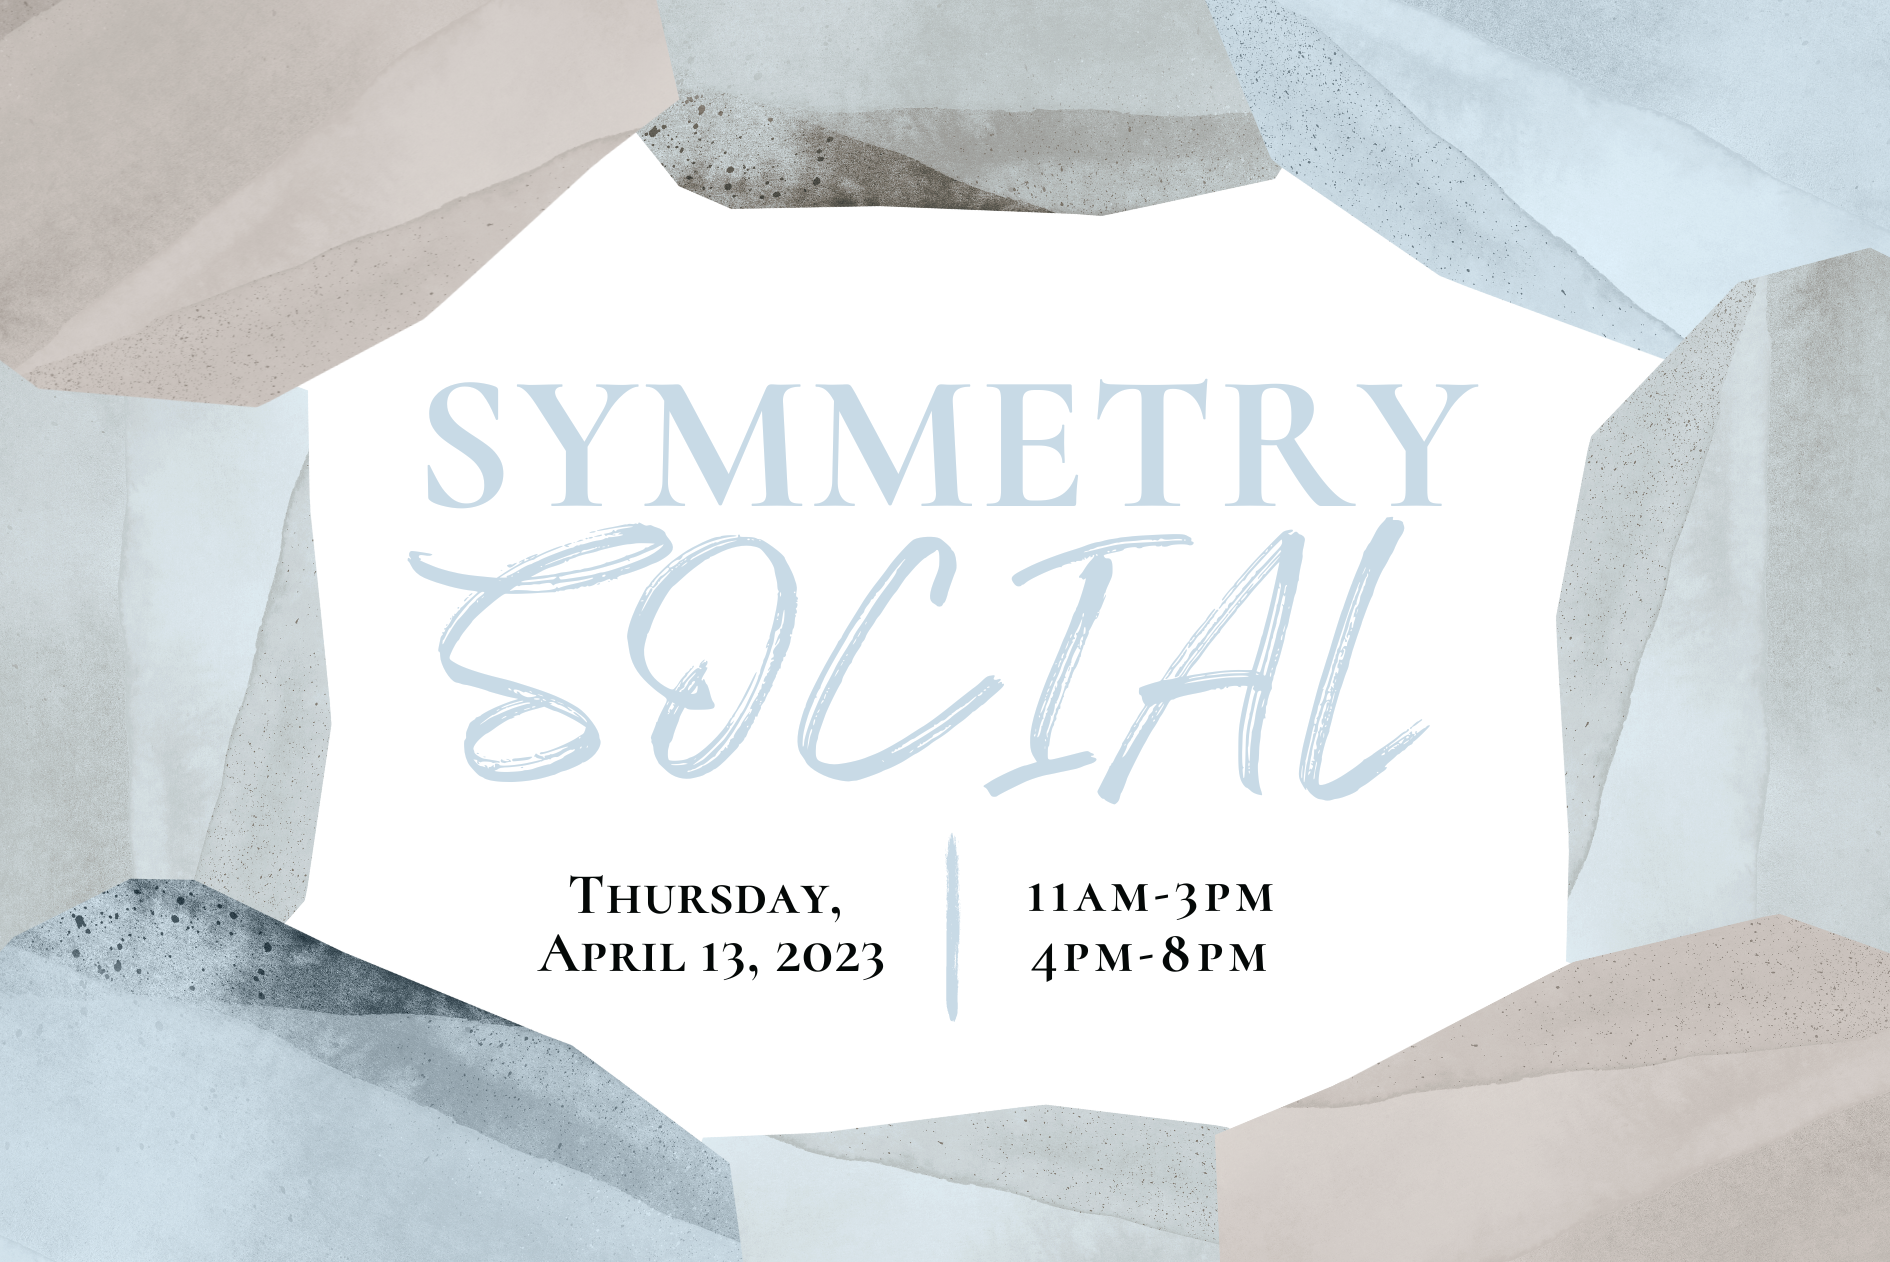 Symmetry Social_Website Graphic (1)